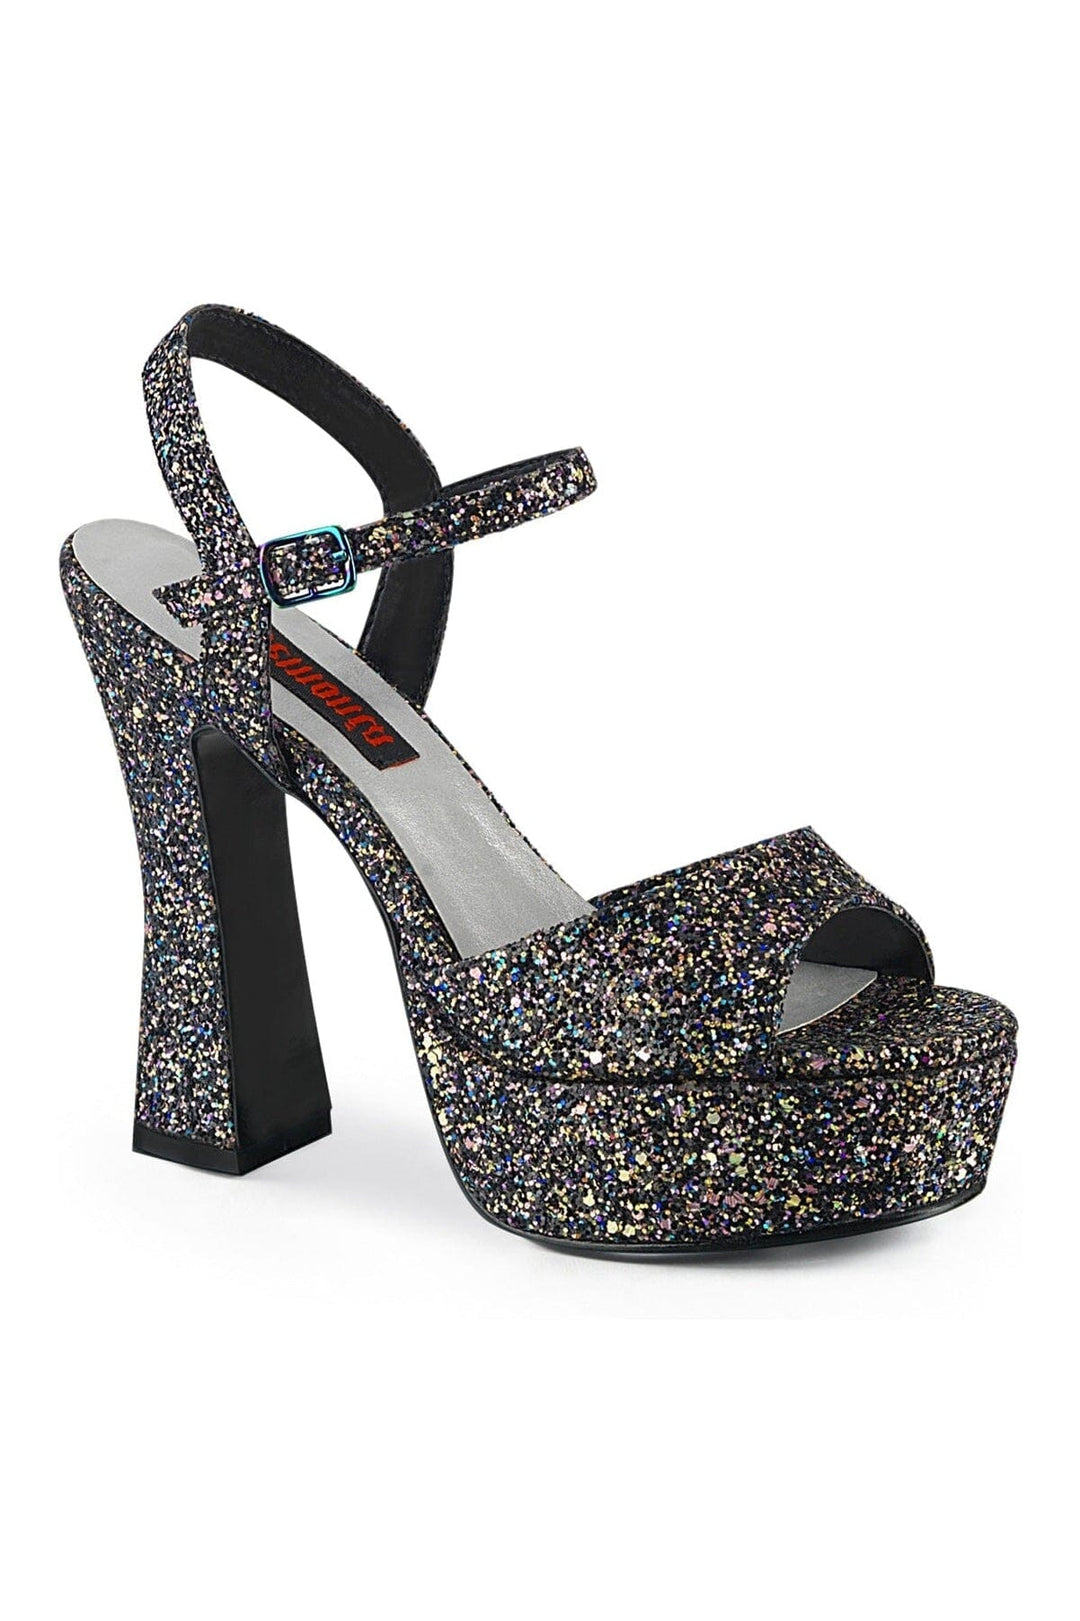 DOLLY-09 Black Glitter Sandal-Sandals-Demonia-Black-10-Glitter-SEXYSHOES.COM